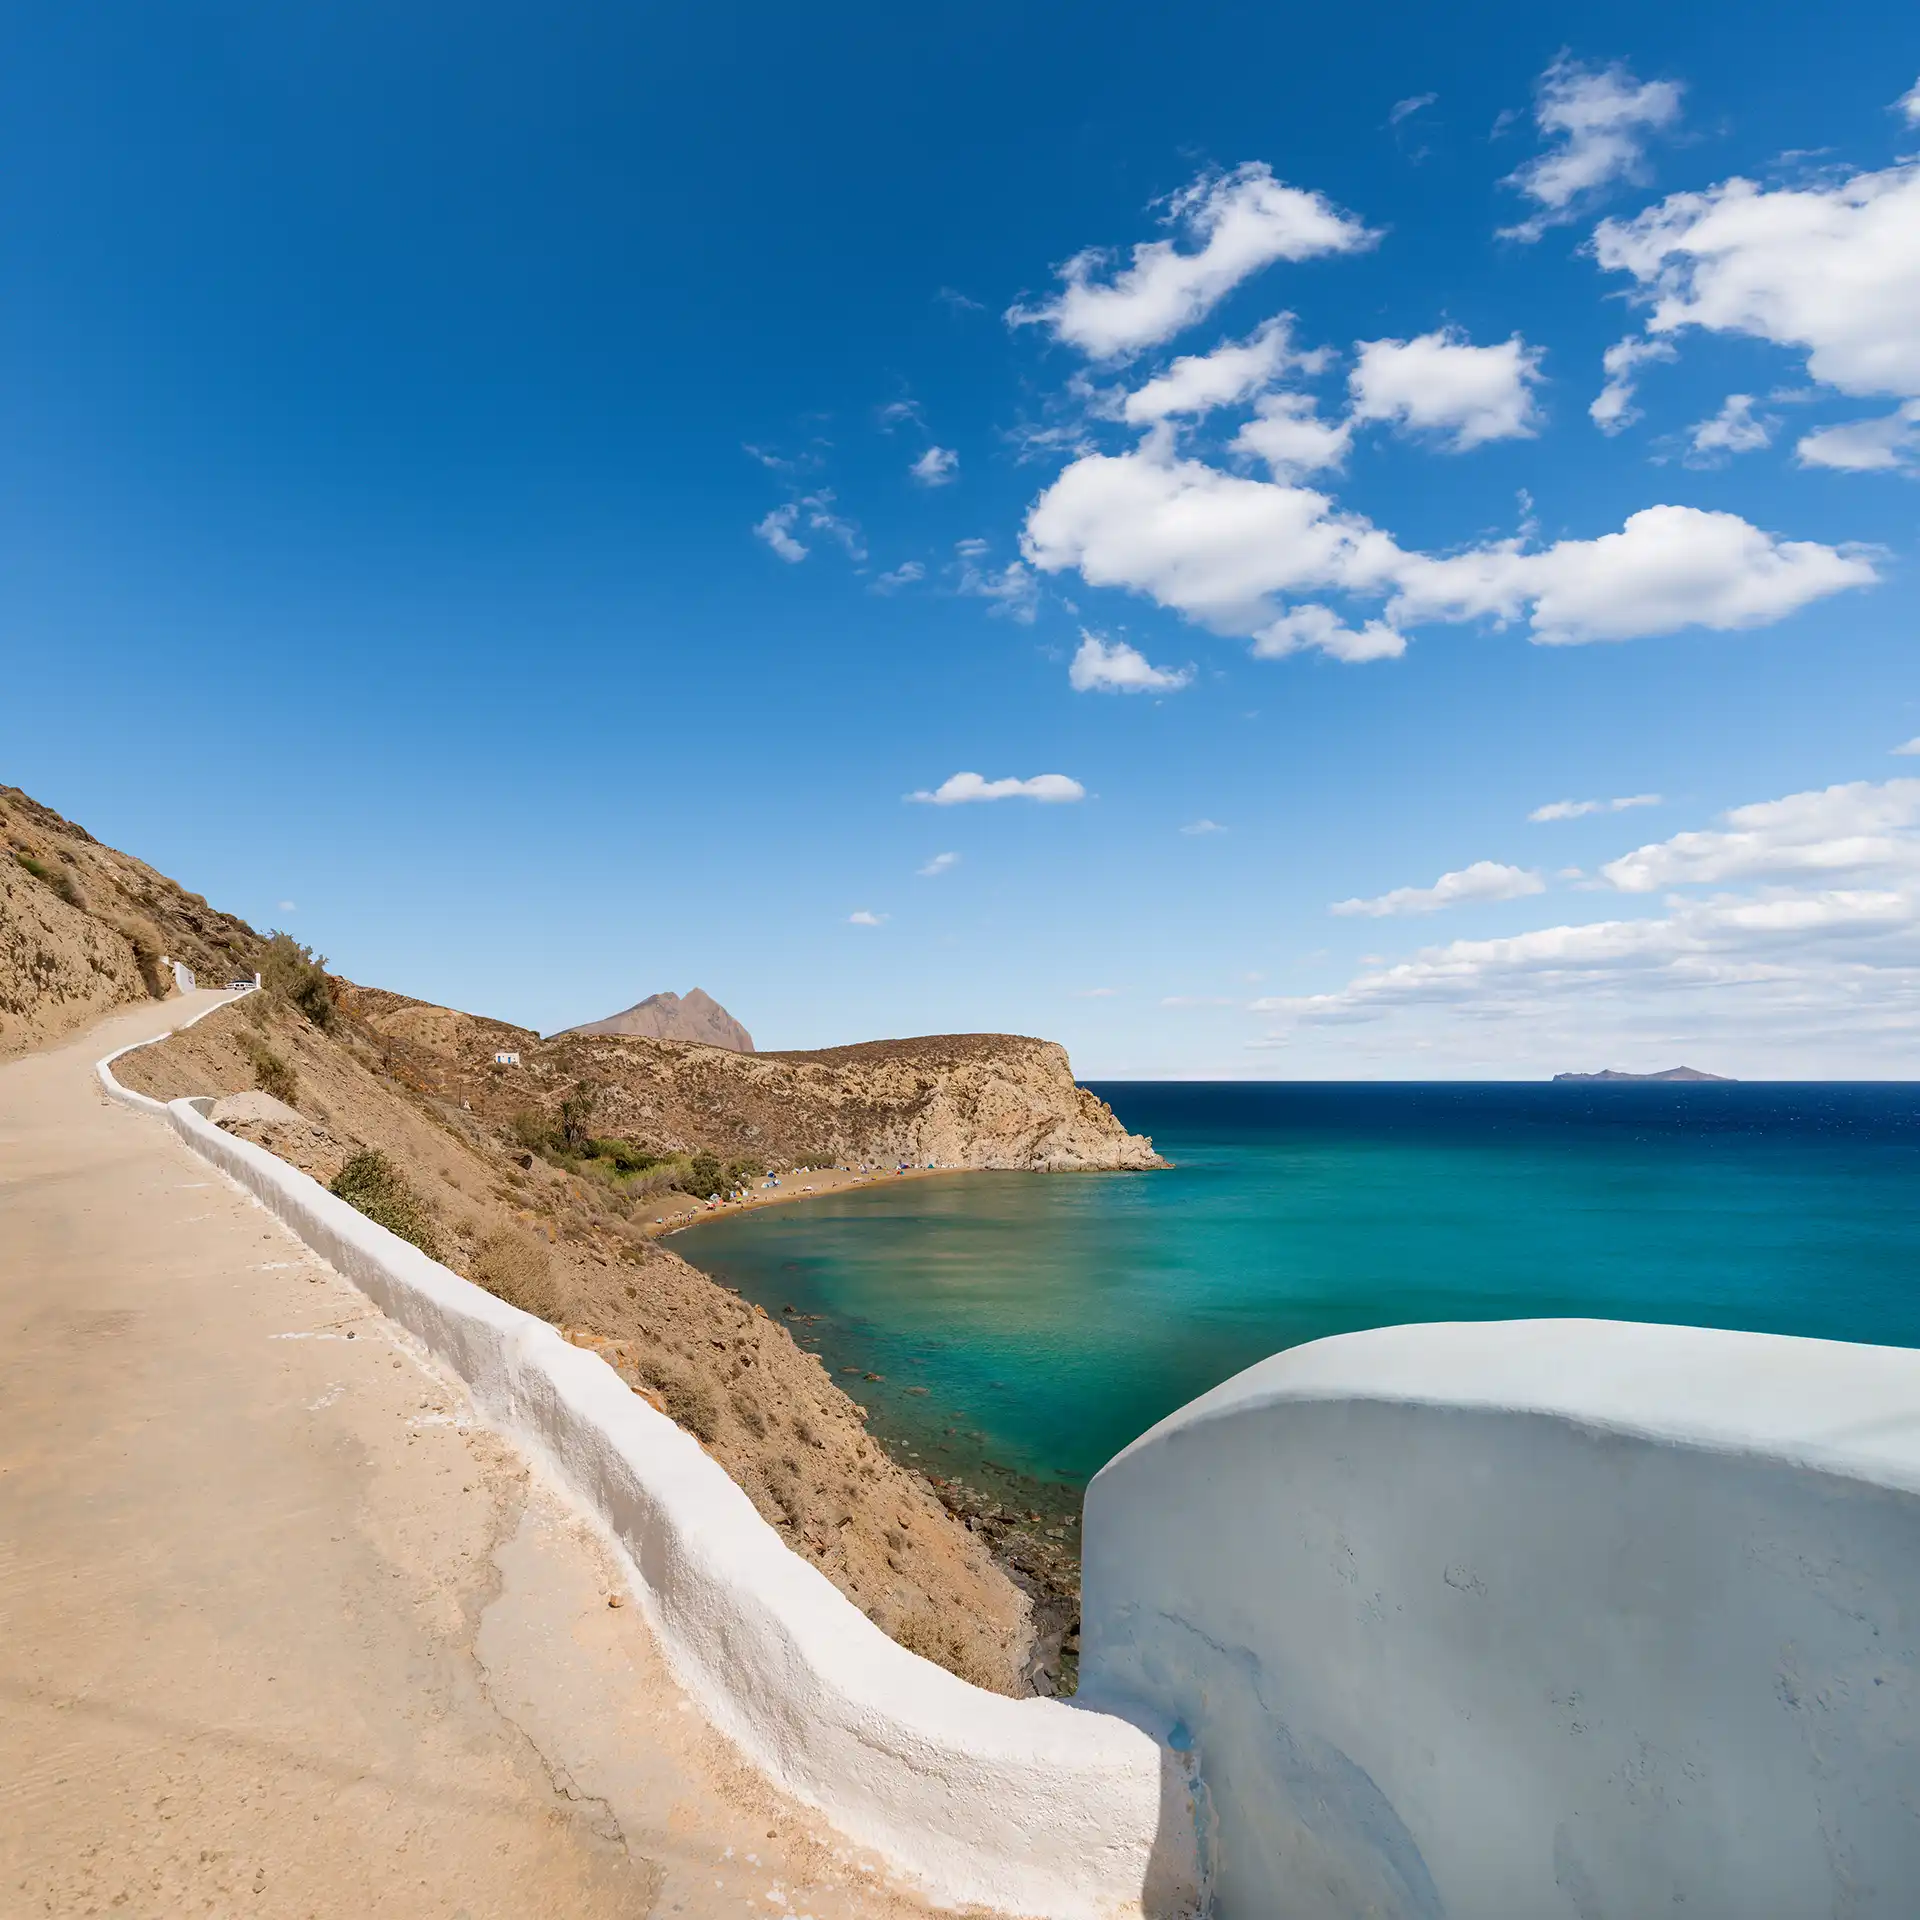 Coastal path along the south coast of the Greek island of Anafi in the Cyclades archipelago